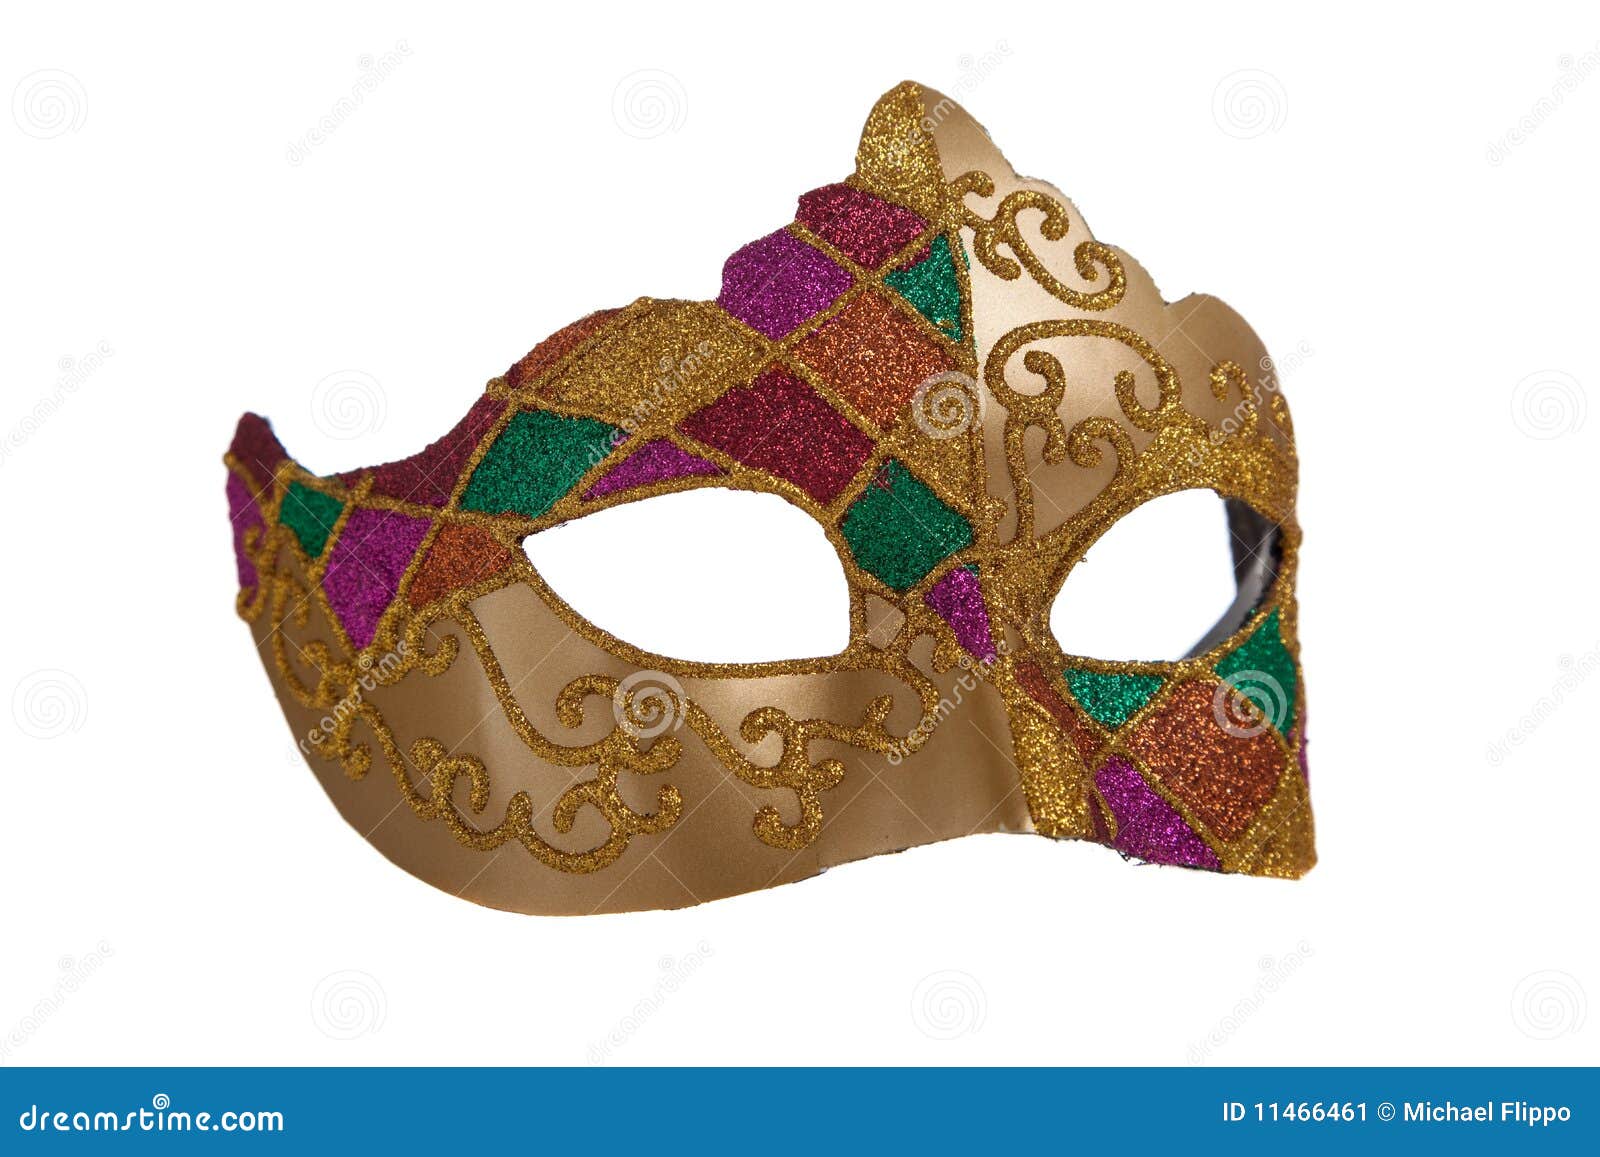 gold mardi gra mask